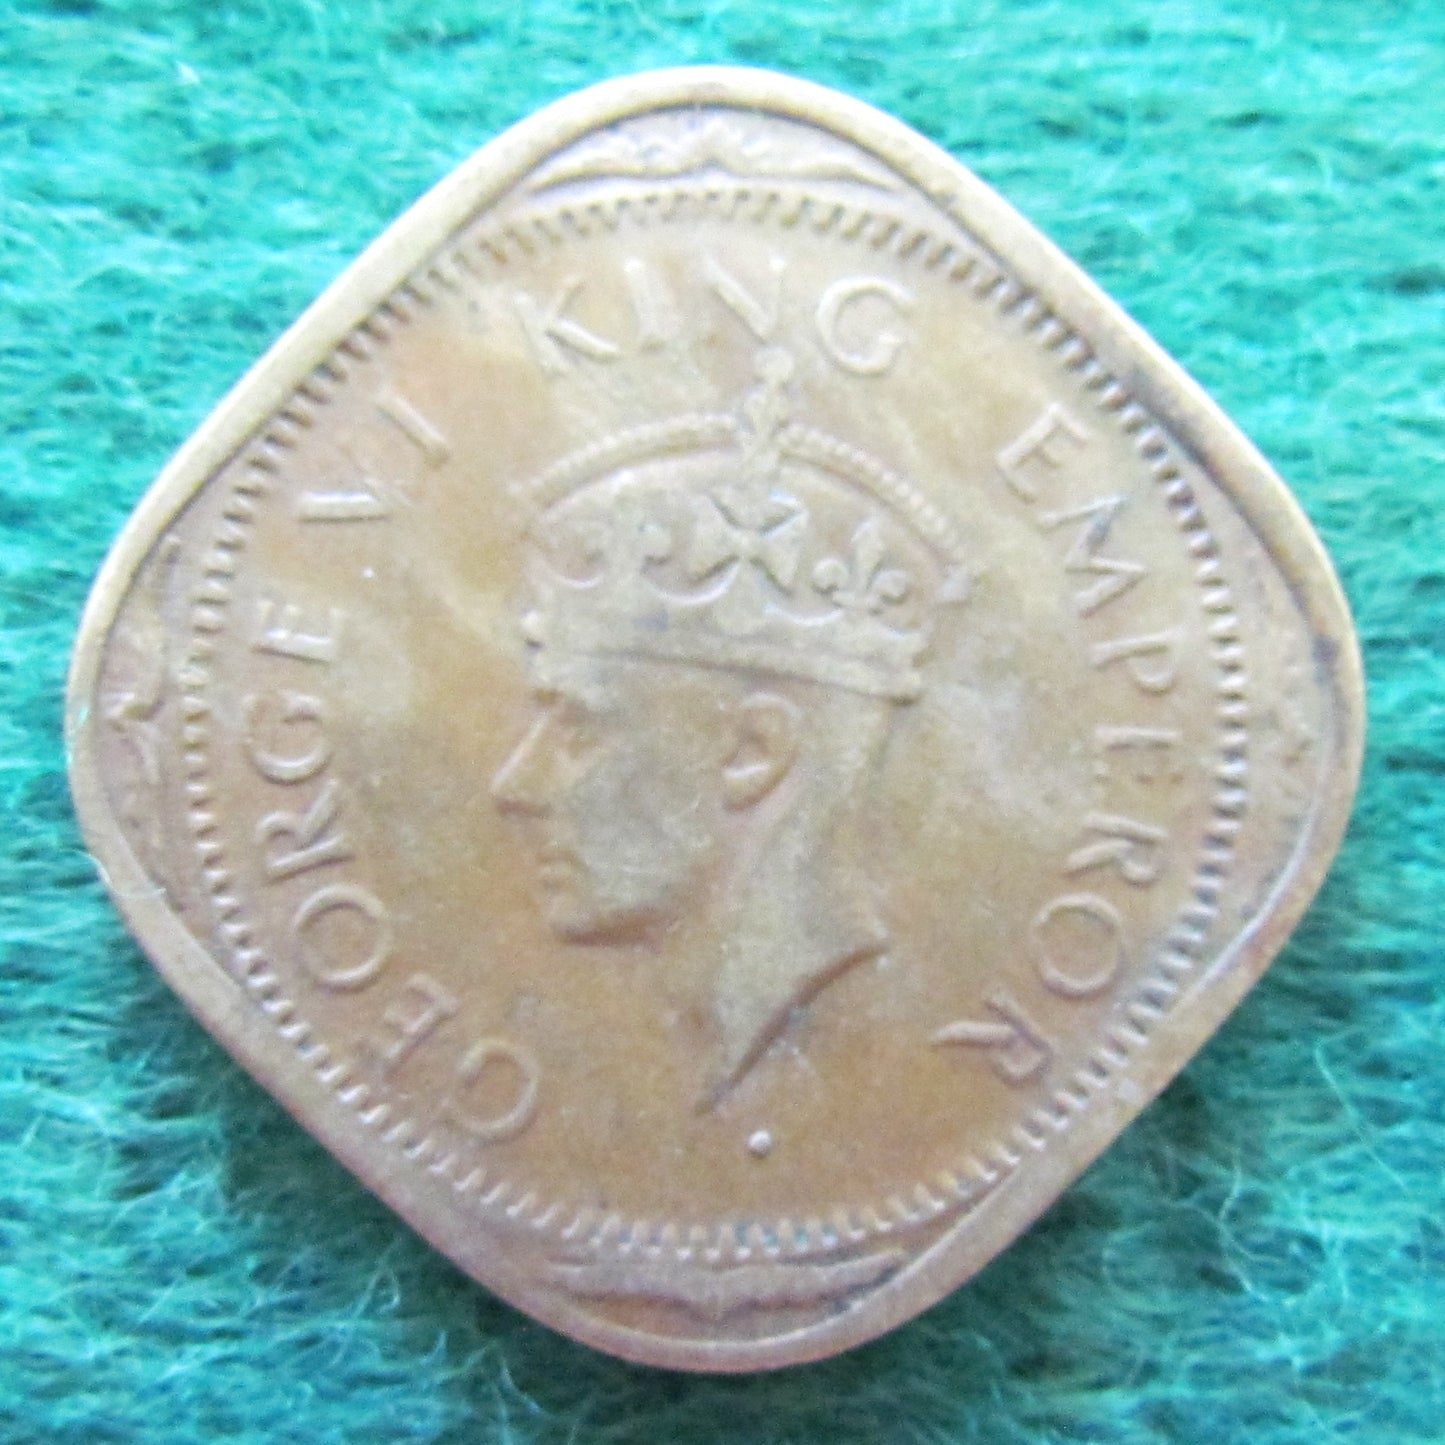 India 1944 2 Annas Coin - Circulated